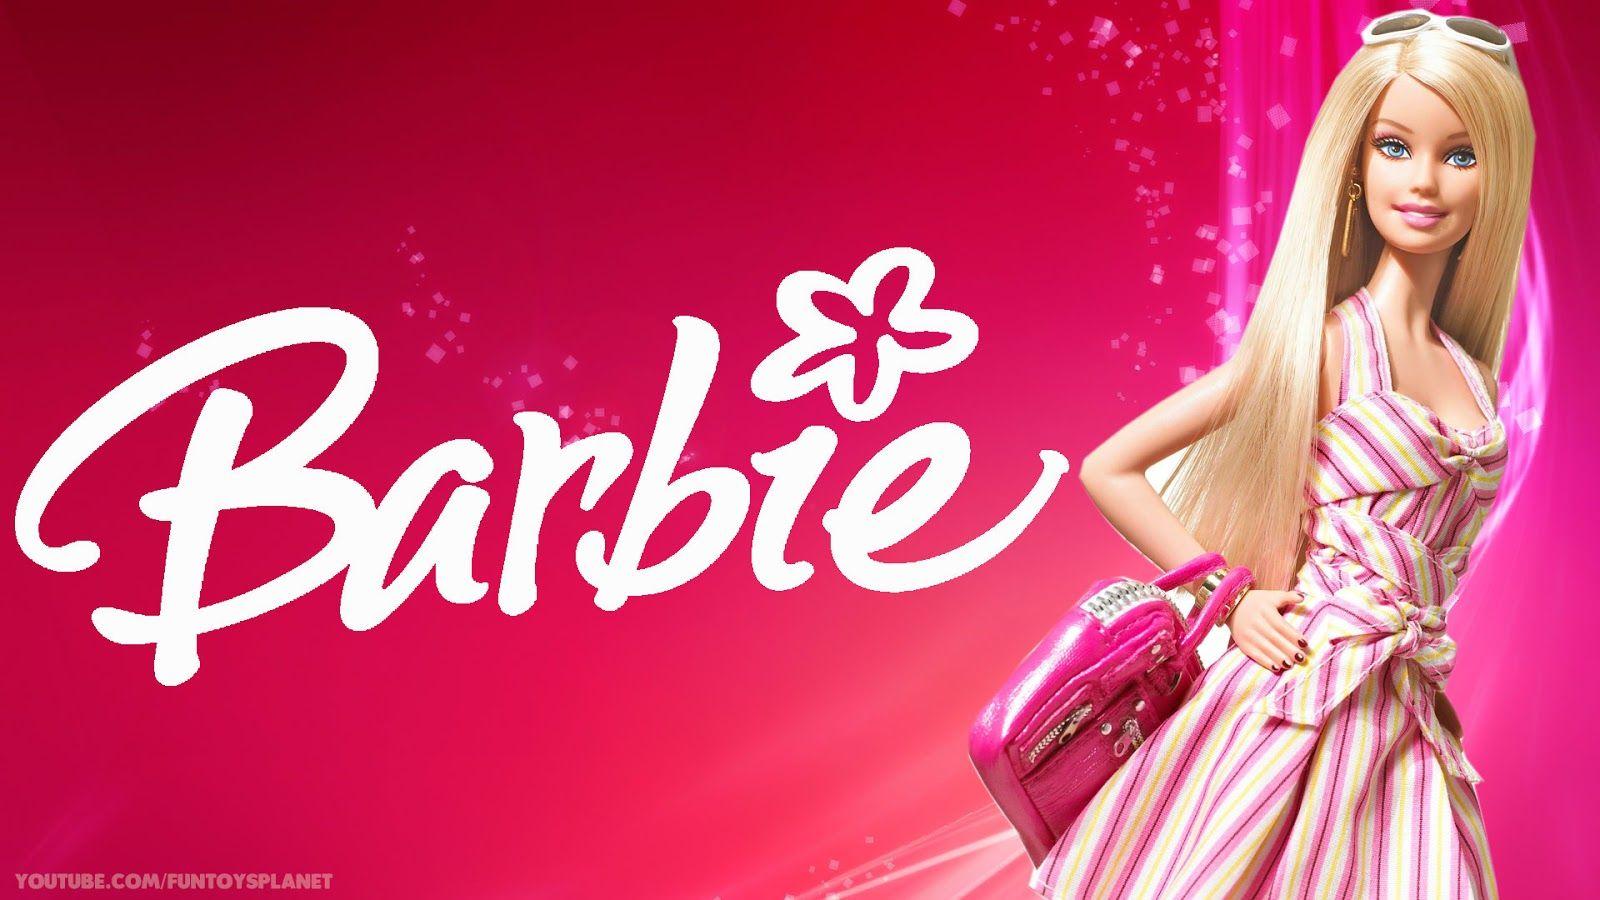 IH41: Barbie Wallpaper, Barbie Background in Best Resolutions, HQFX